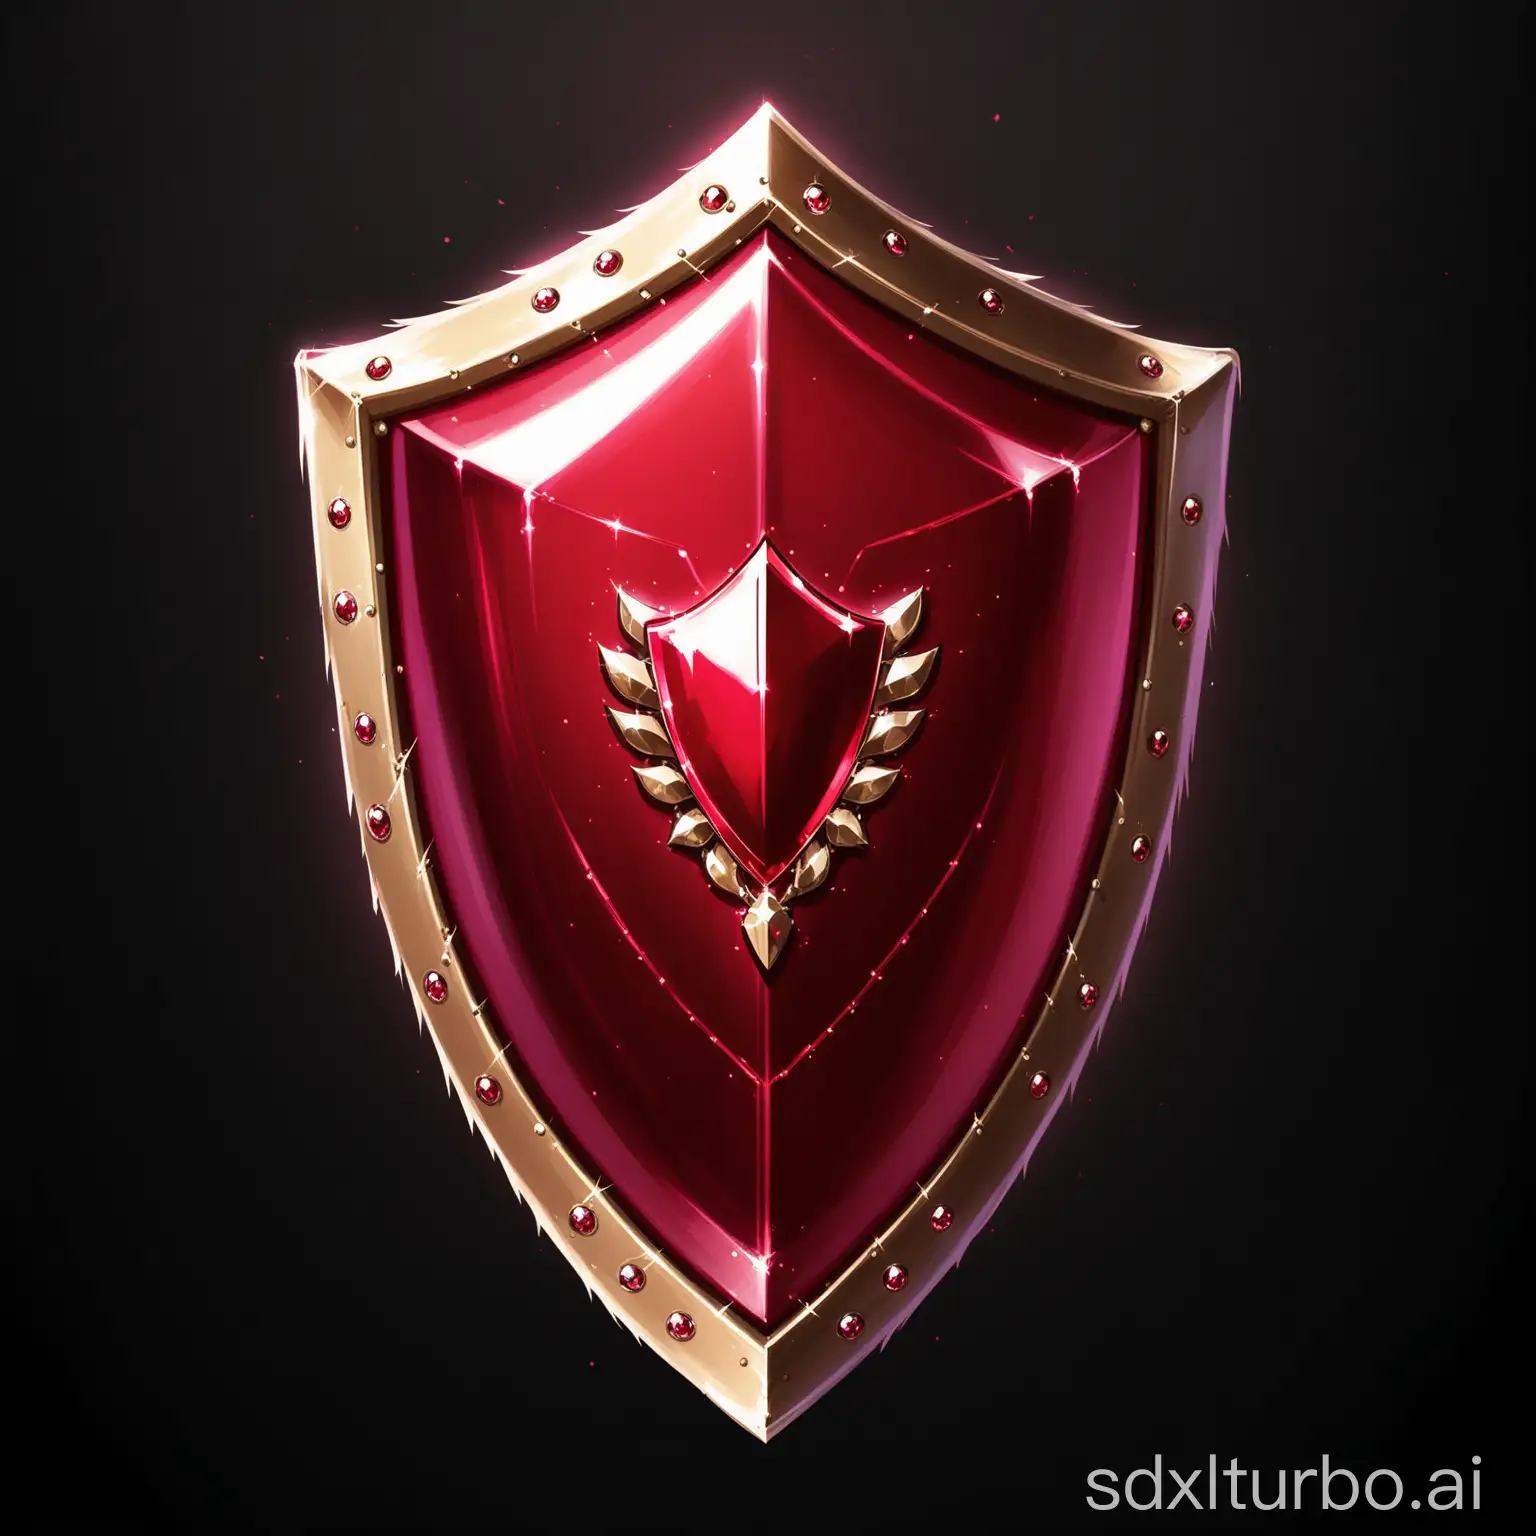 An elegant ruby shield on a black background